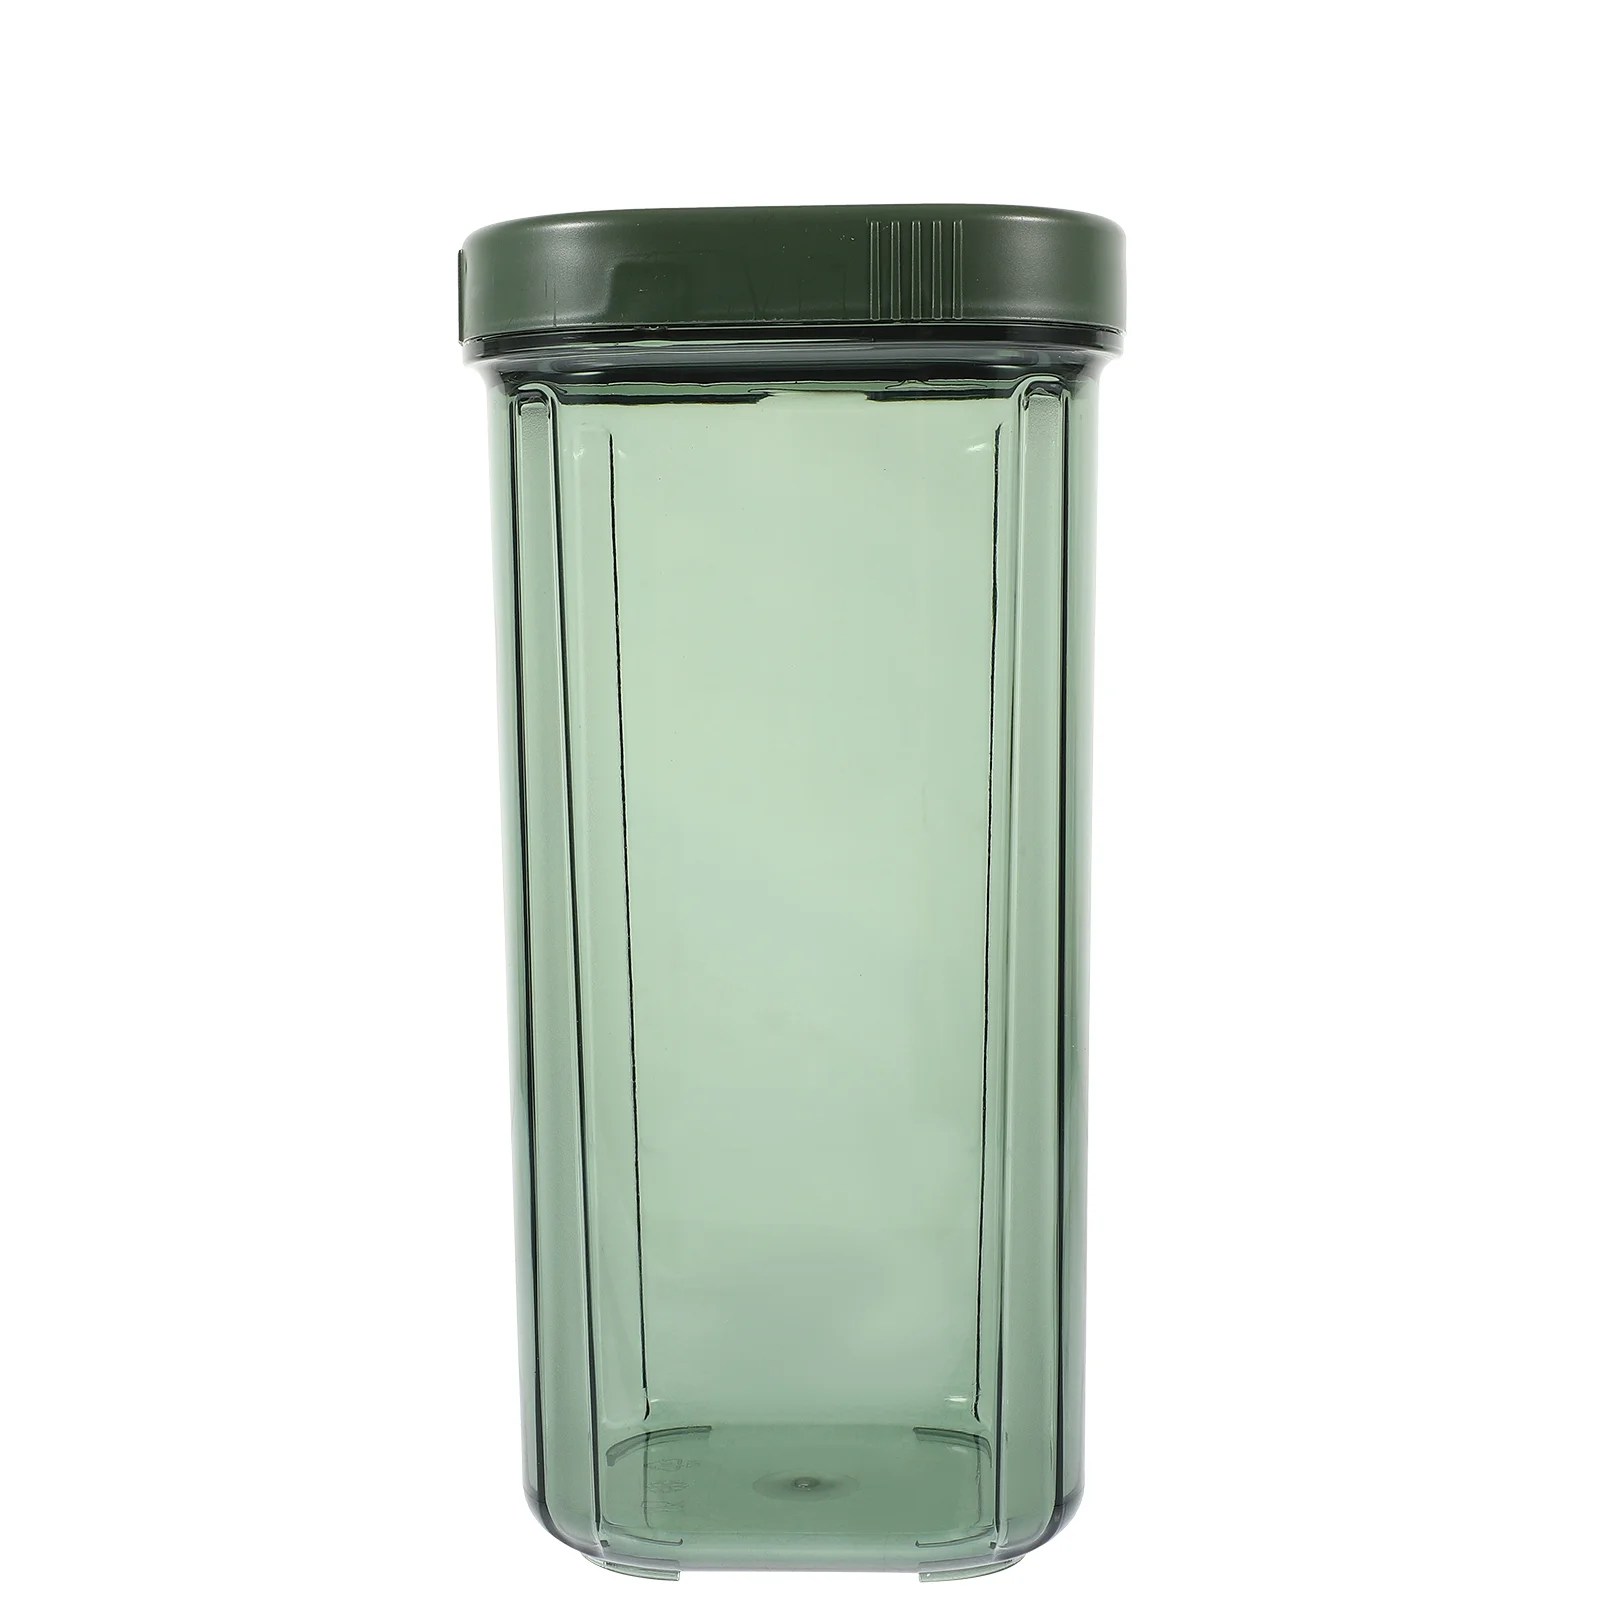 

Pet Airtight Jar Terrarium Tank Clear Jars Lids Buckle Rice Storage Boxes Containers Organizing The Loose Tea